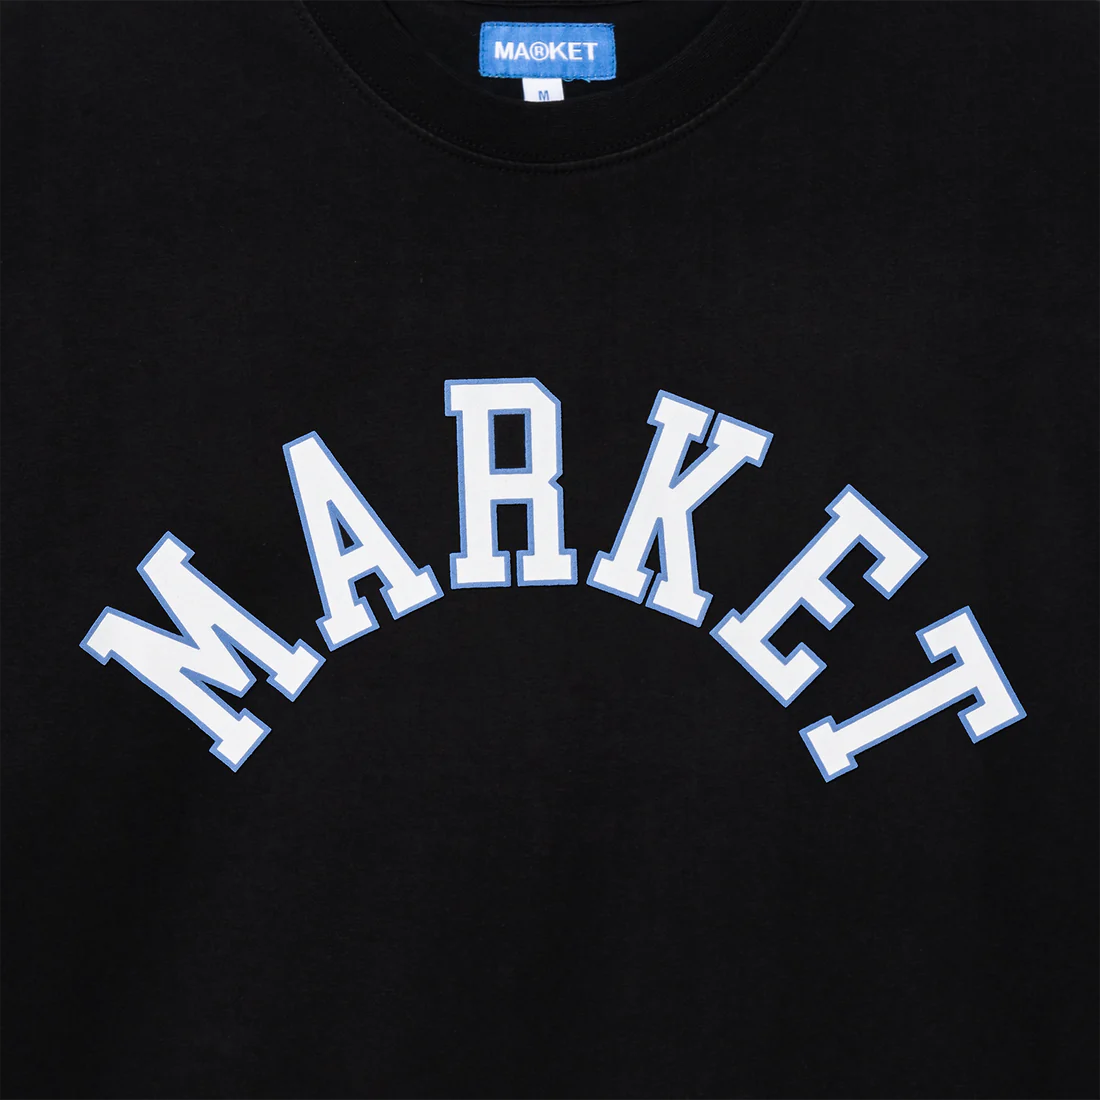 Market Men's Throwback Arc T-shirt - Black